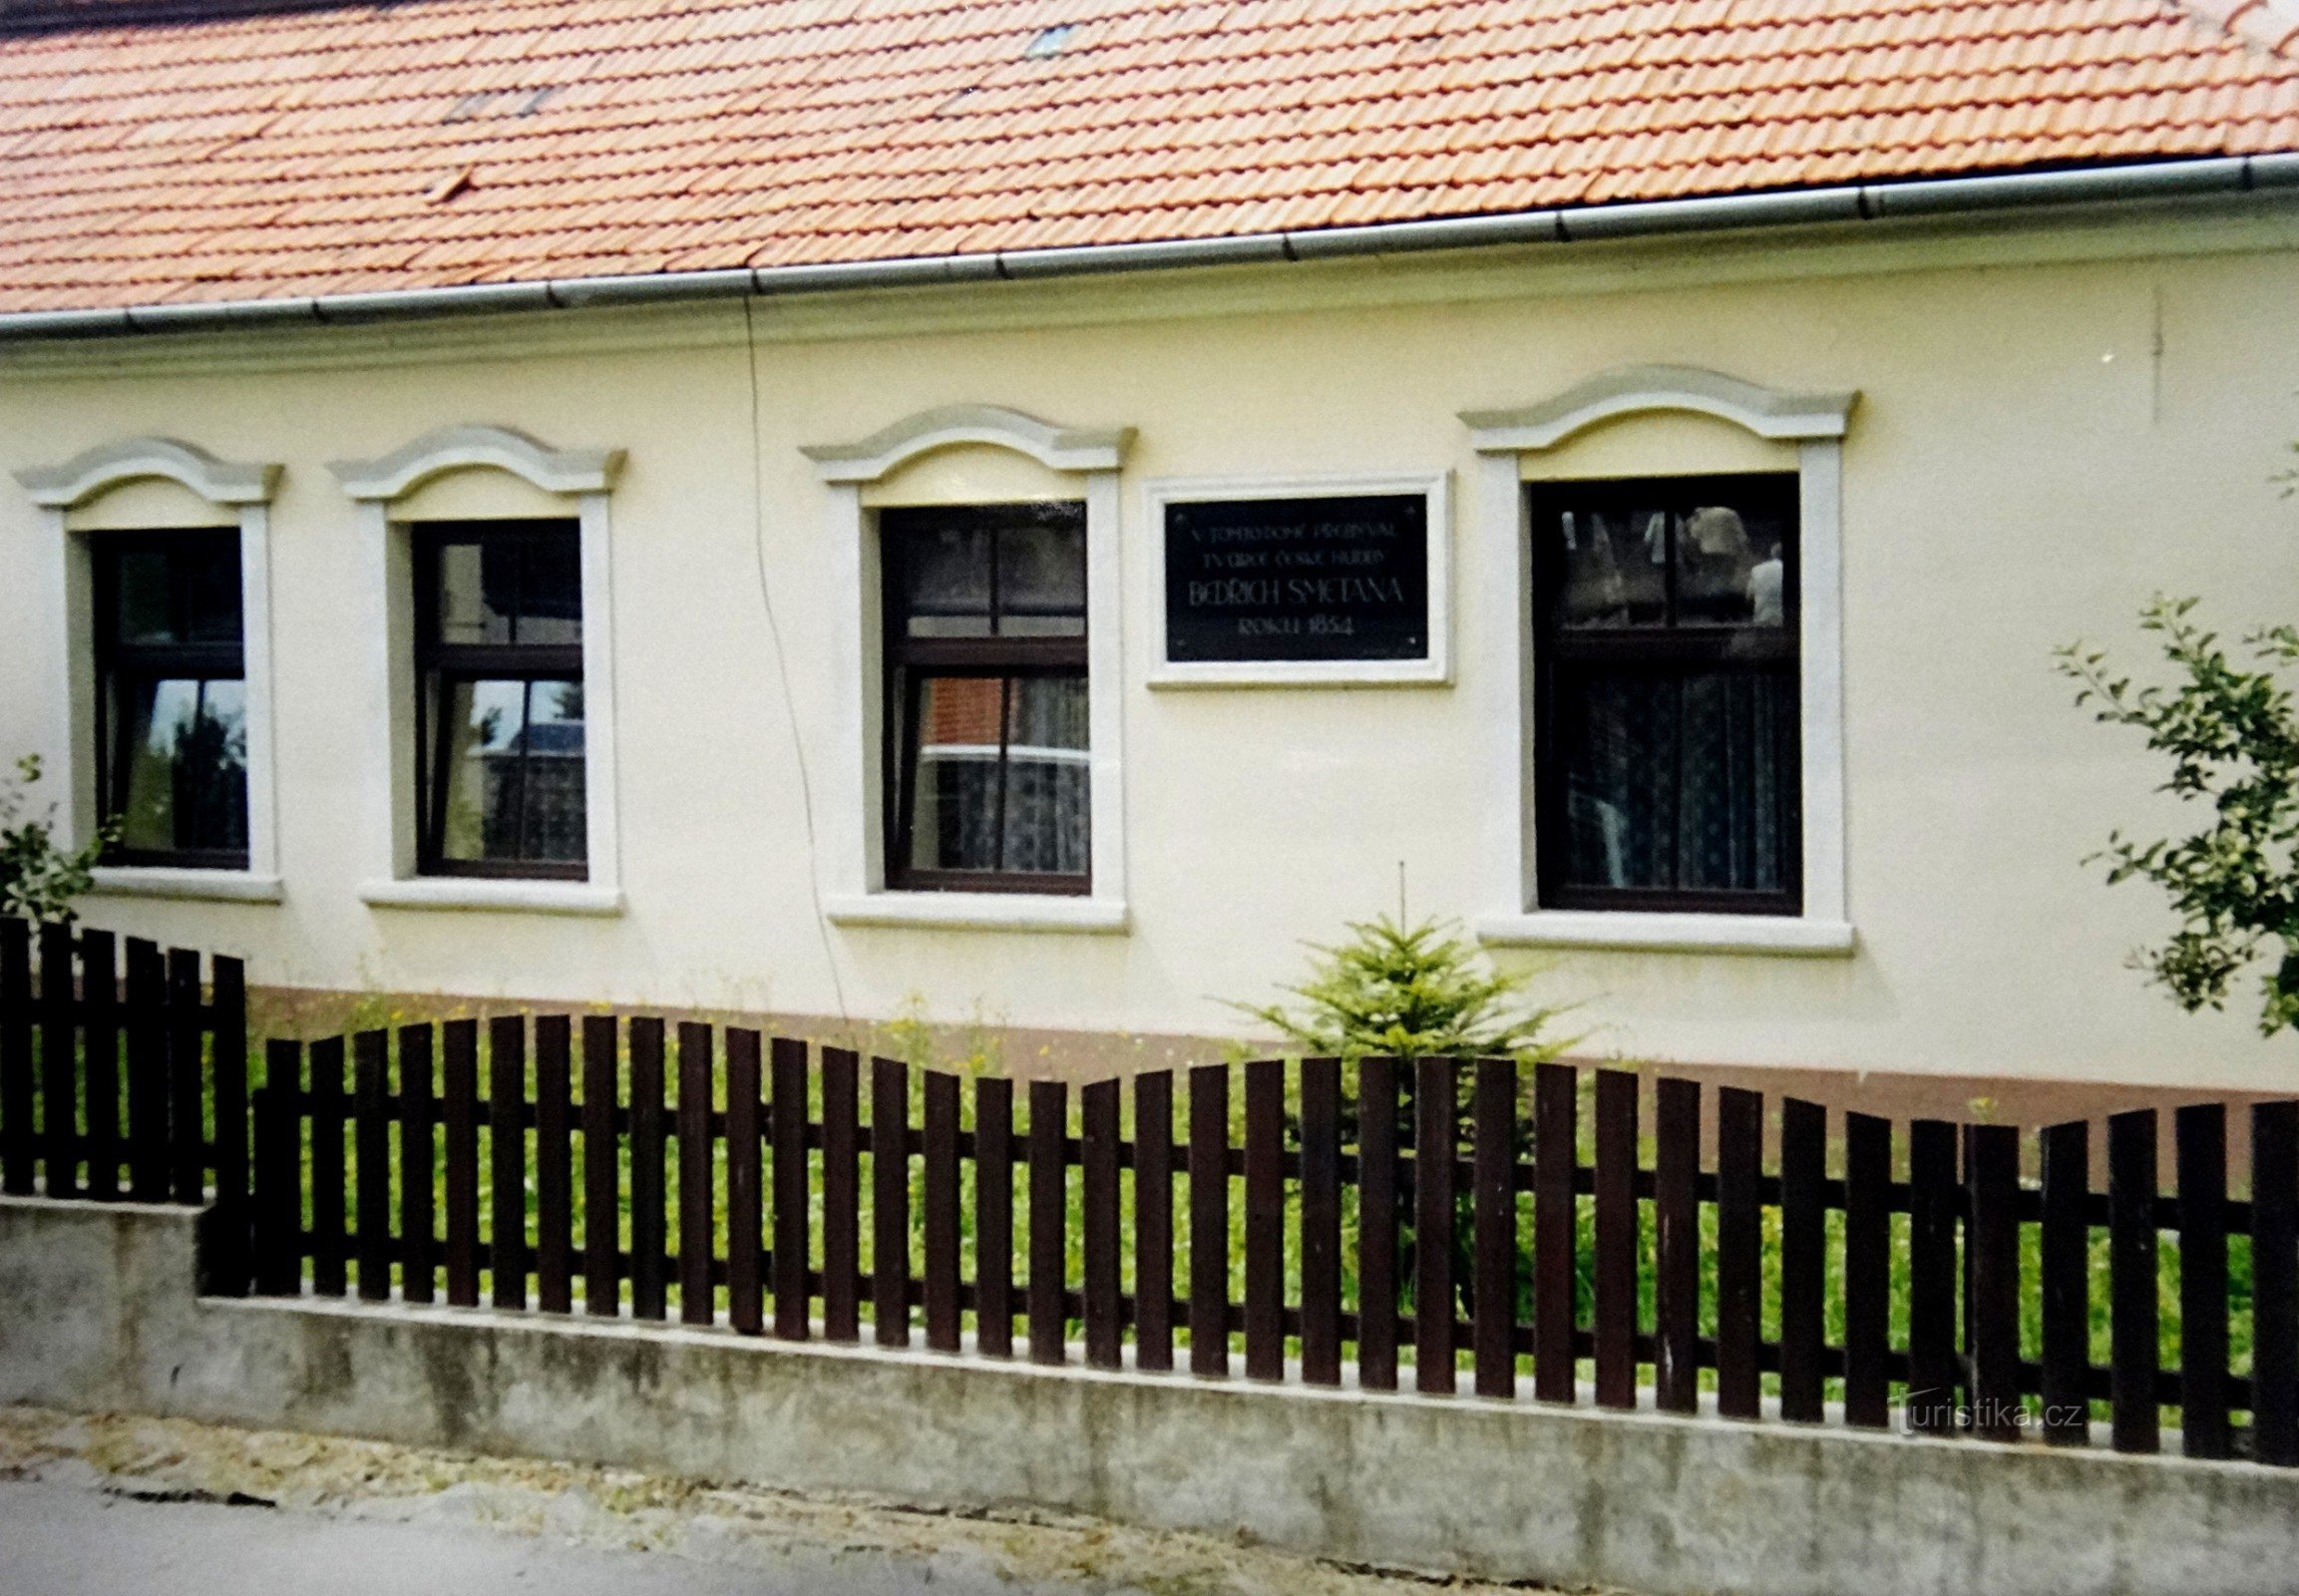 Týn nad Bečvou huis waar de familie Smetanov woonde